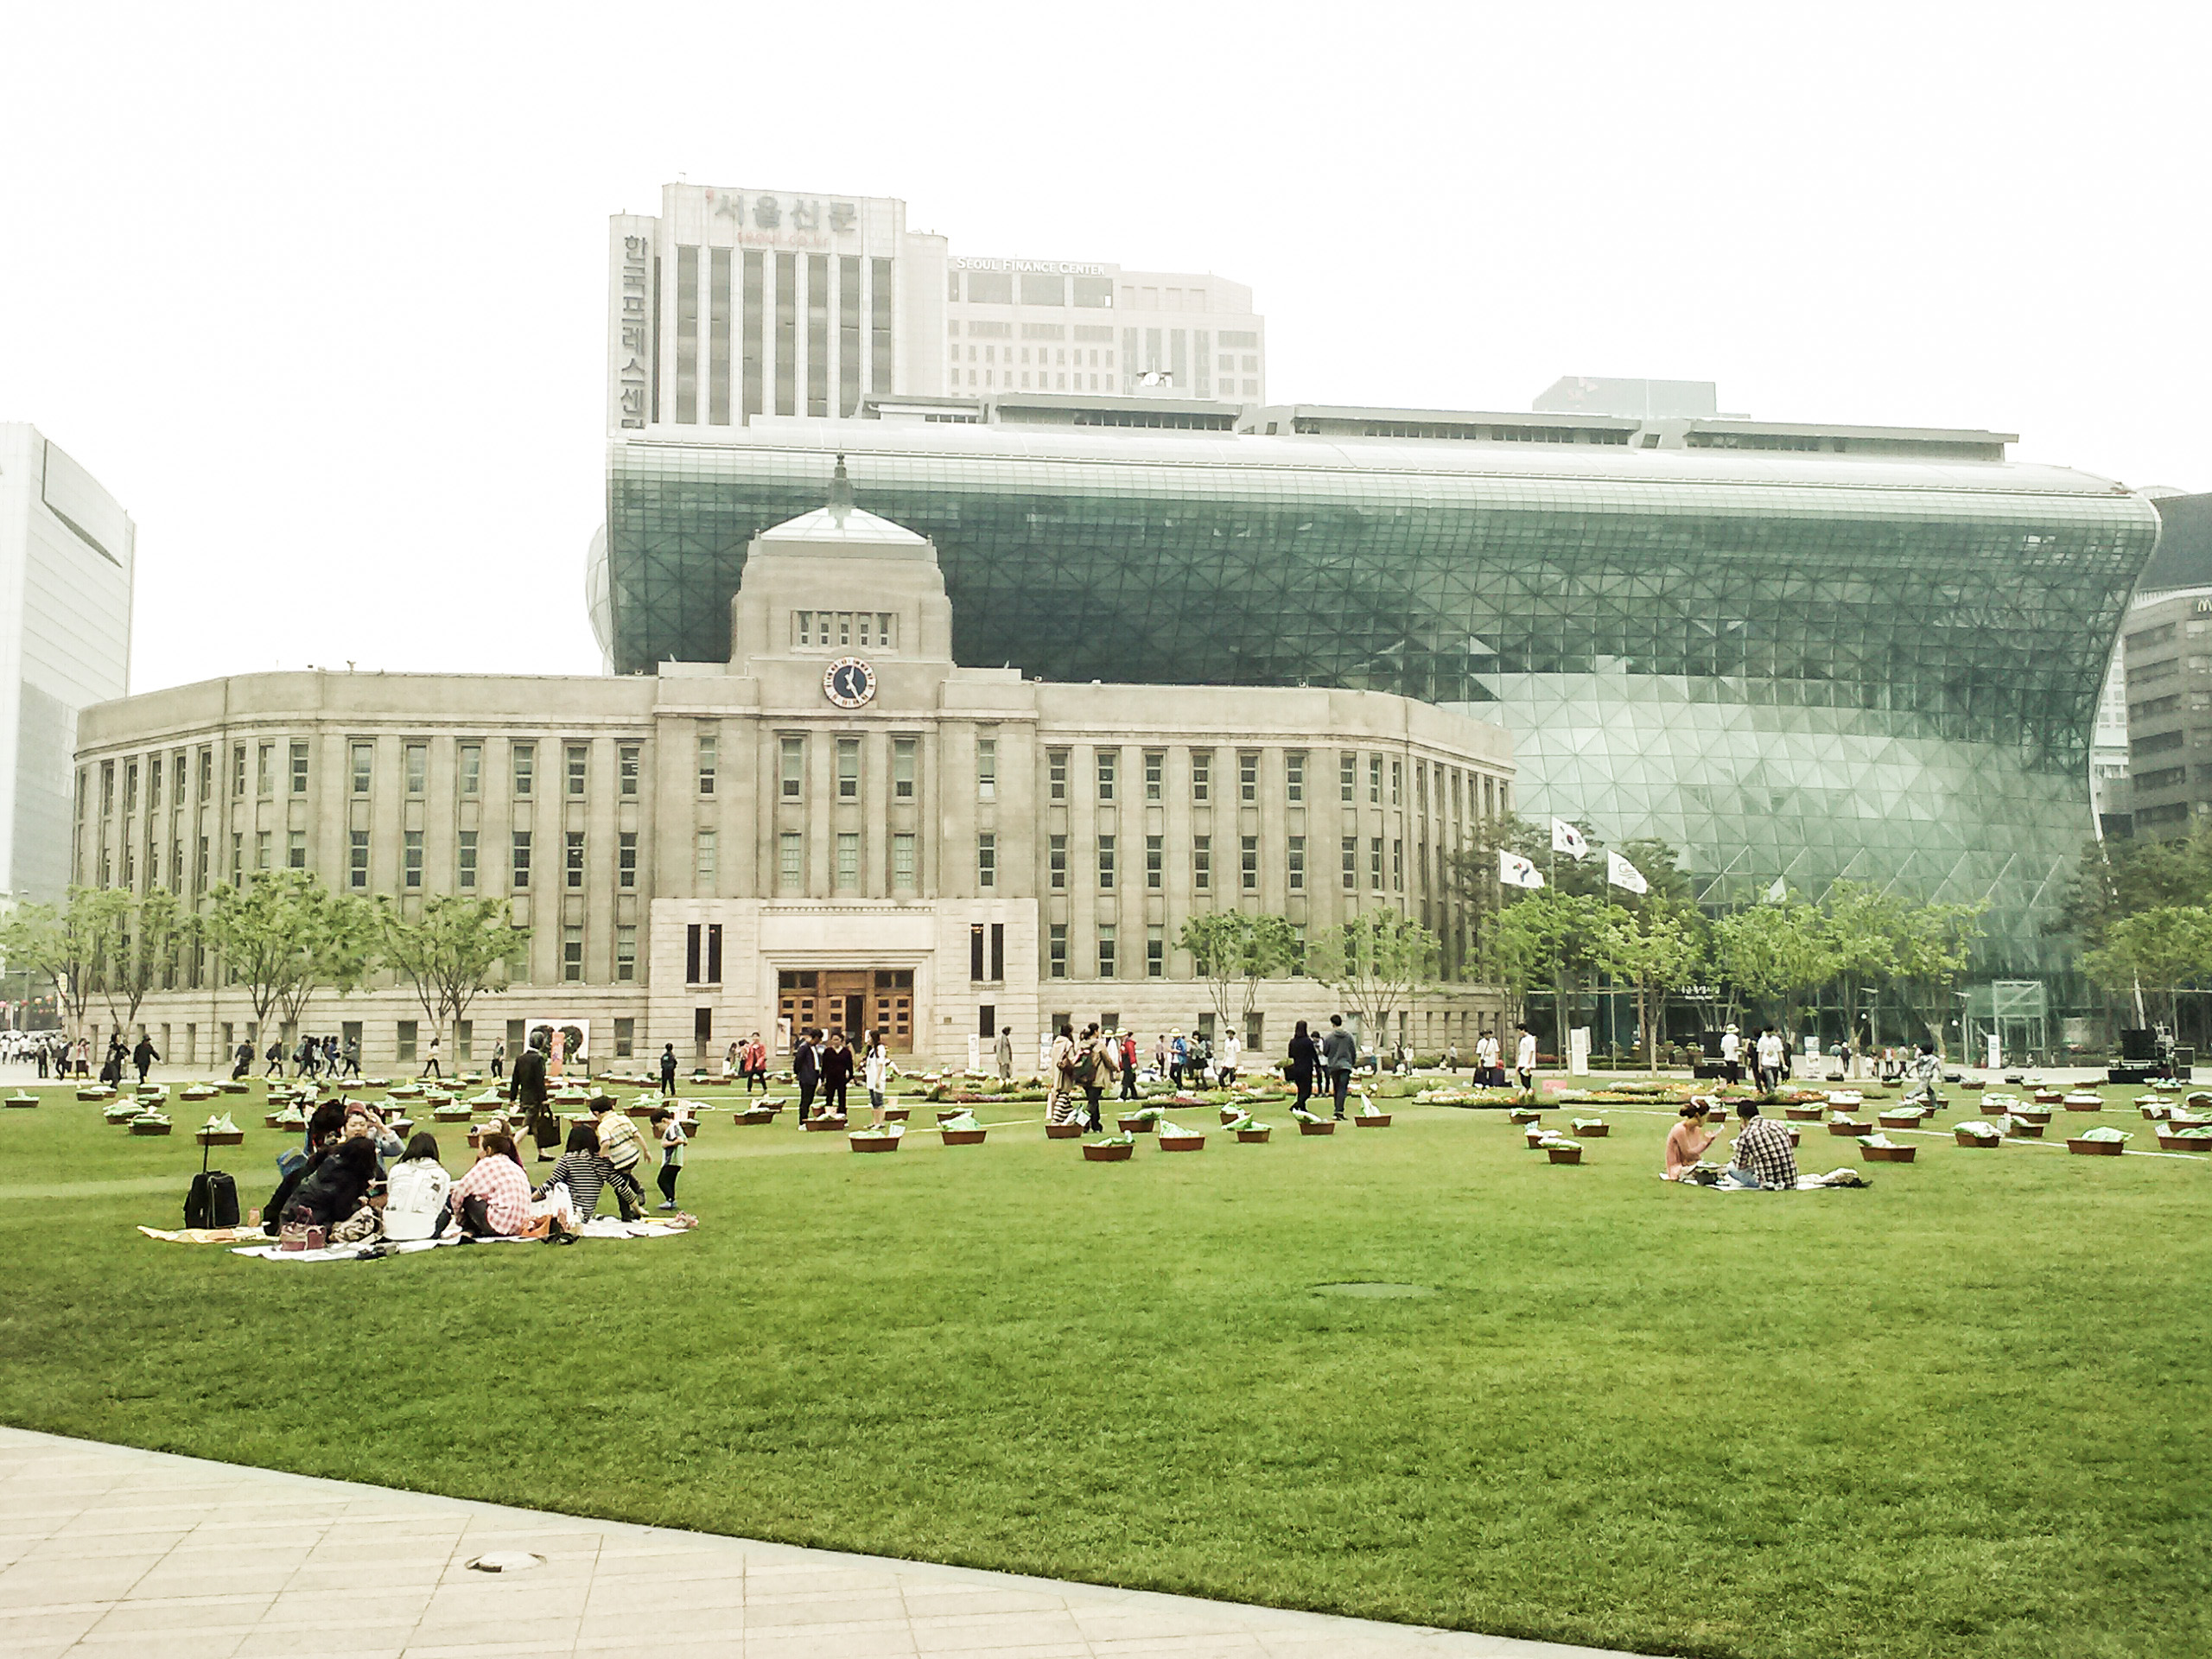 Seoul New City Hall / iArc Architects